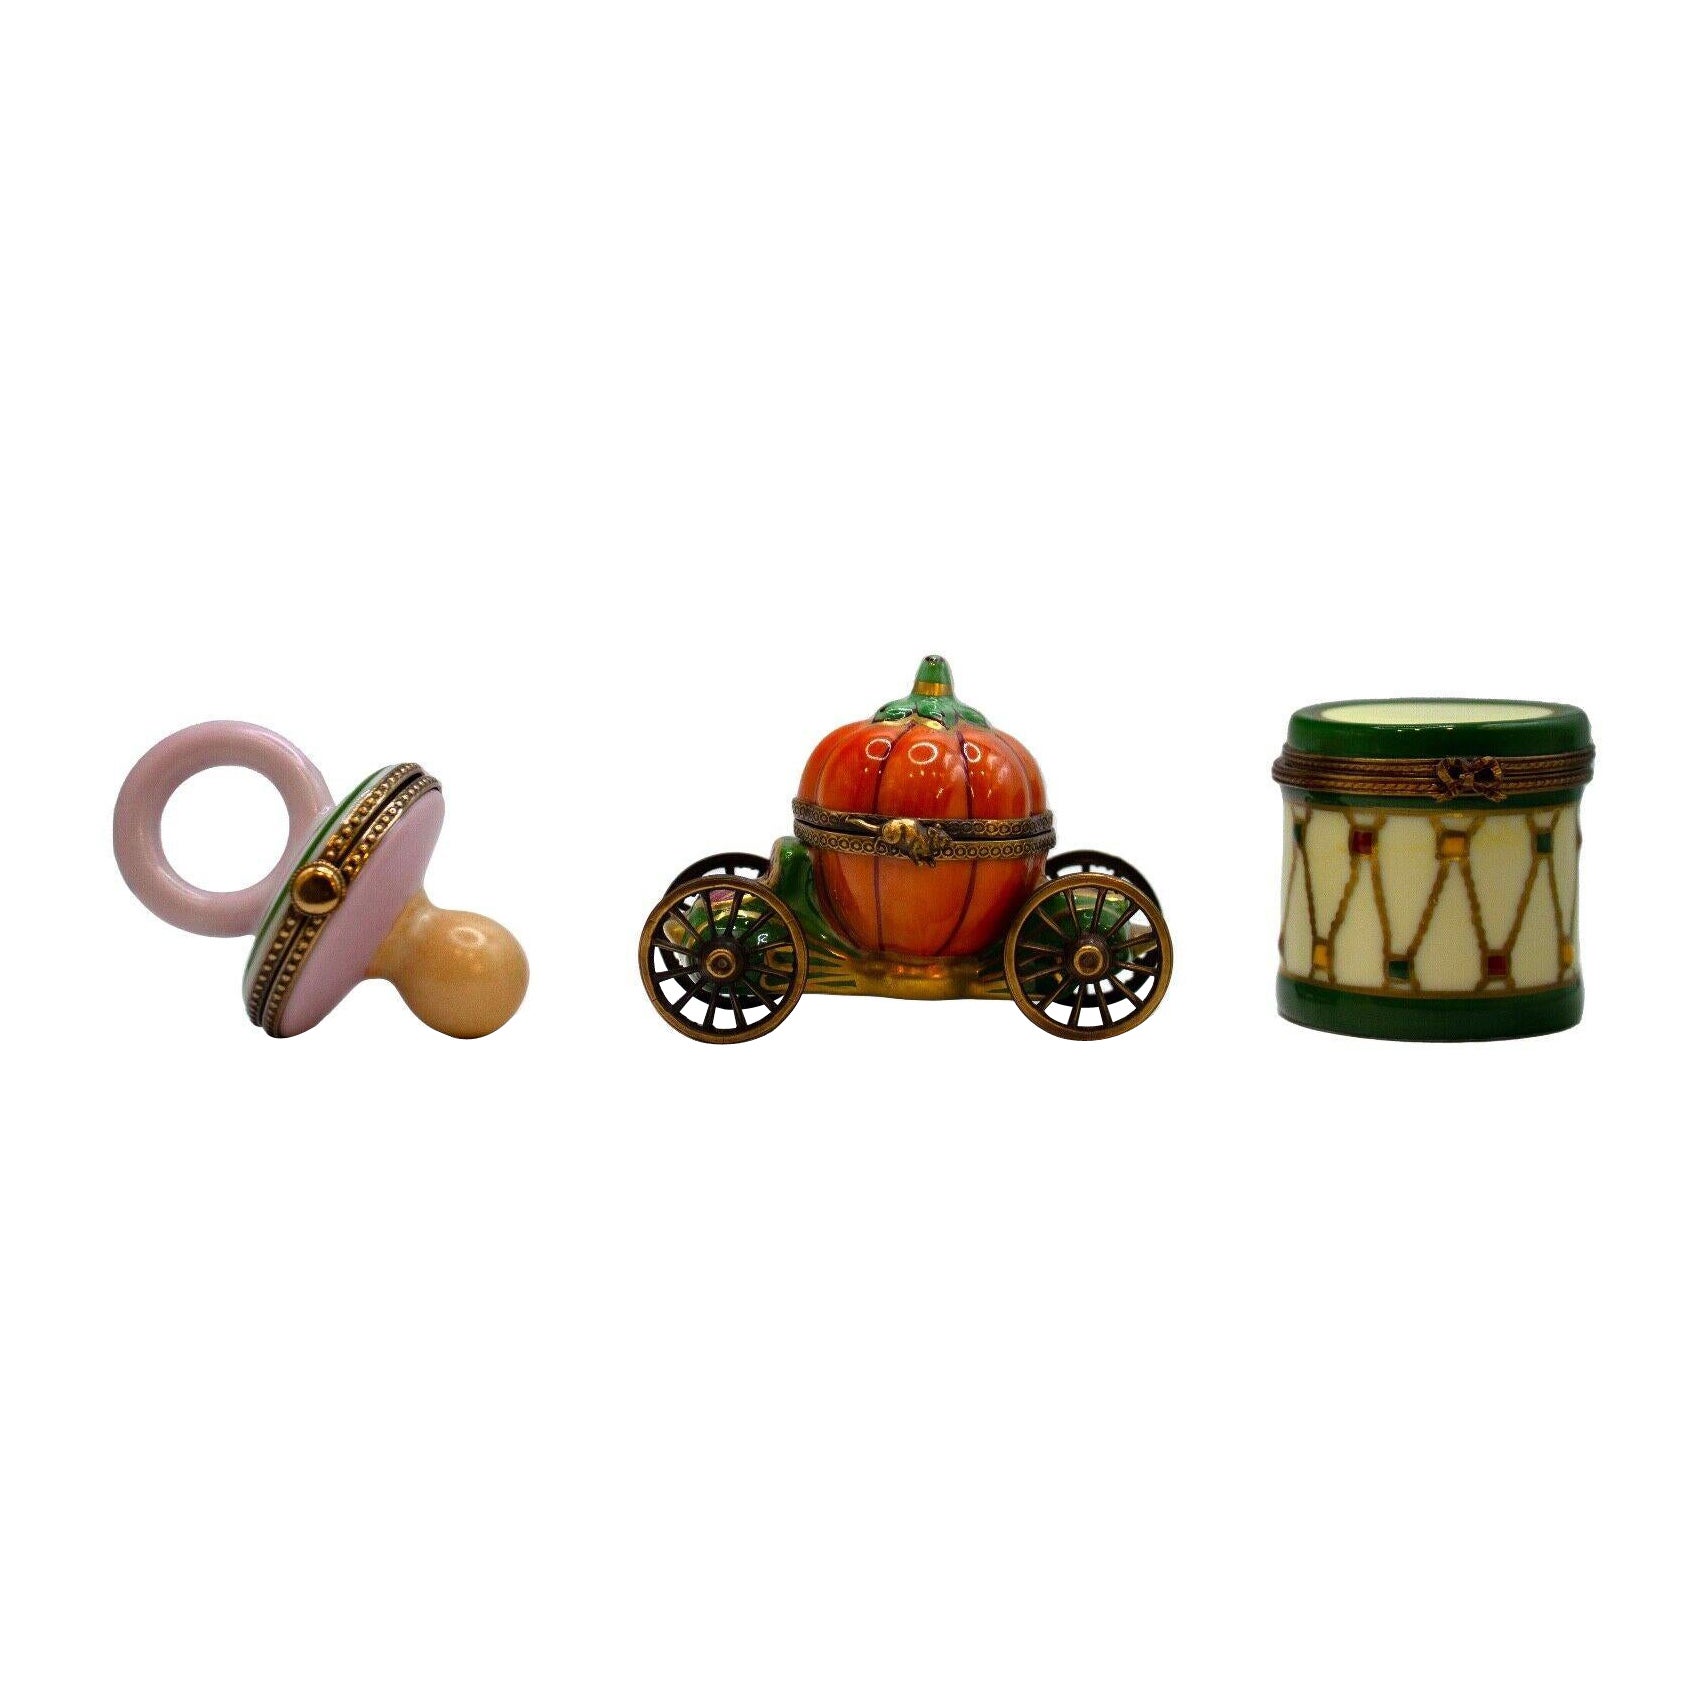 Limoges Pacifier Cinderella’s Pumpkin Carriage & Green Drum Set Mini Porcelin